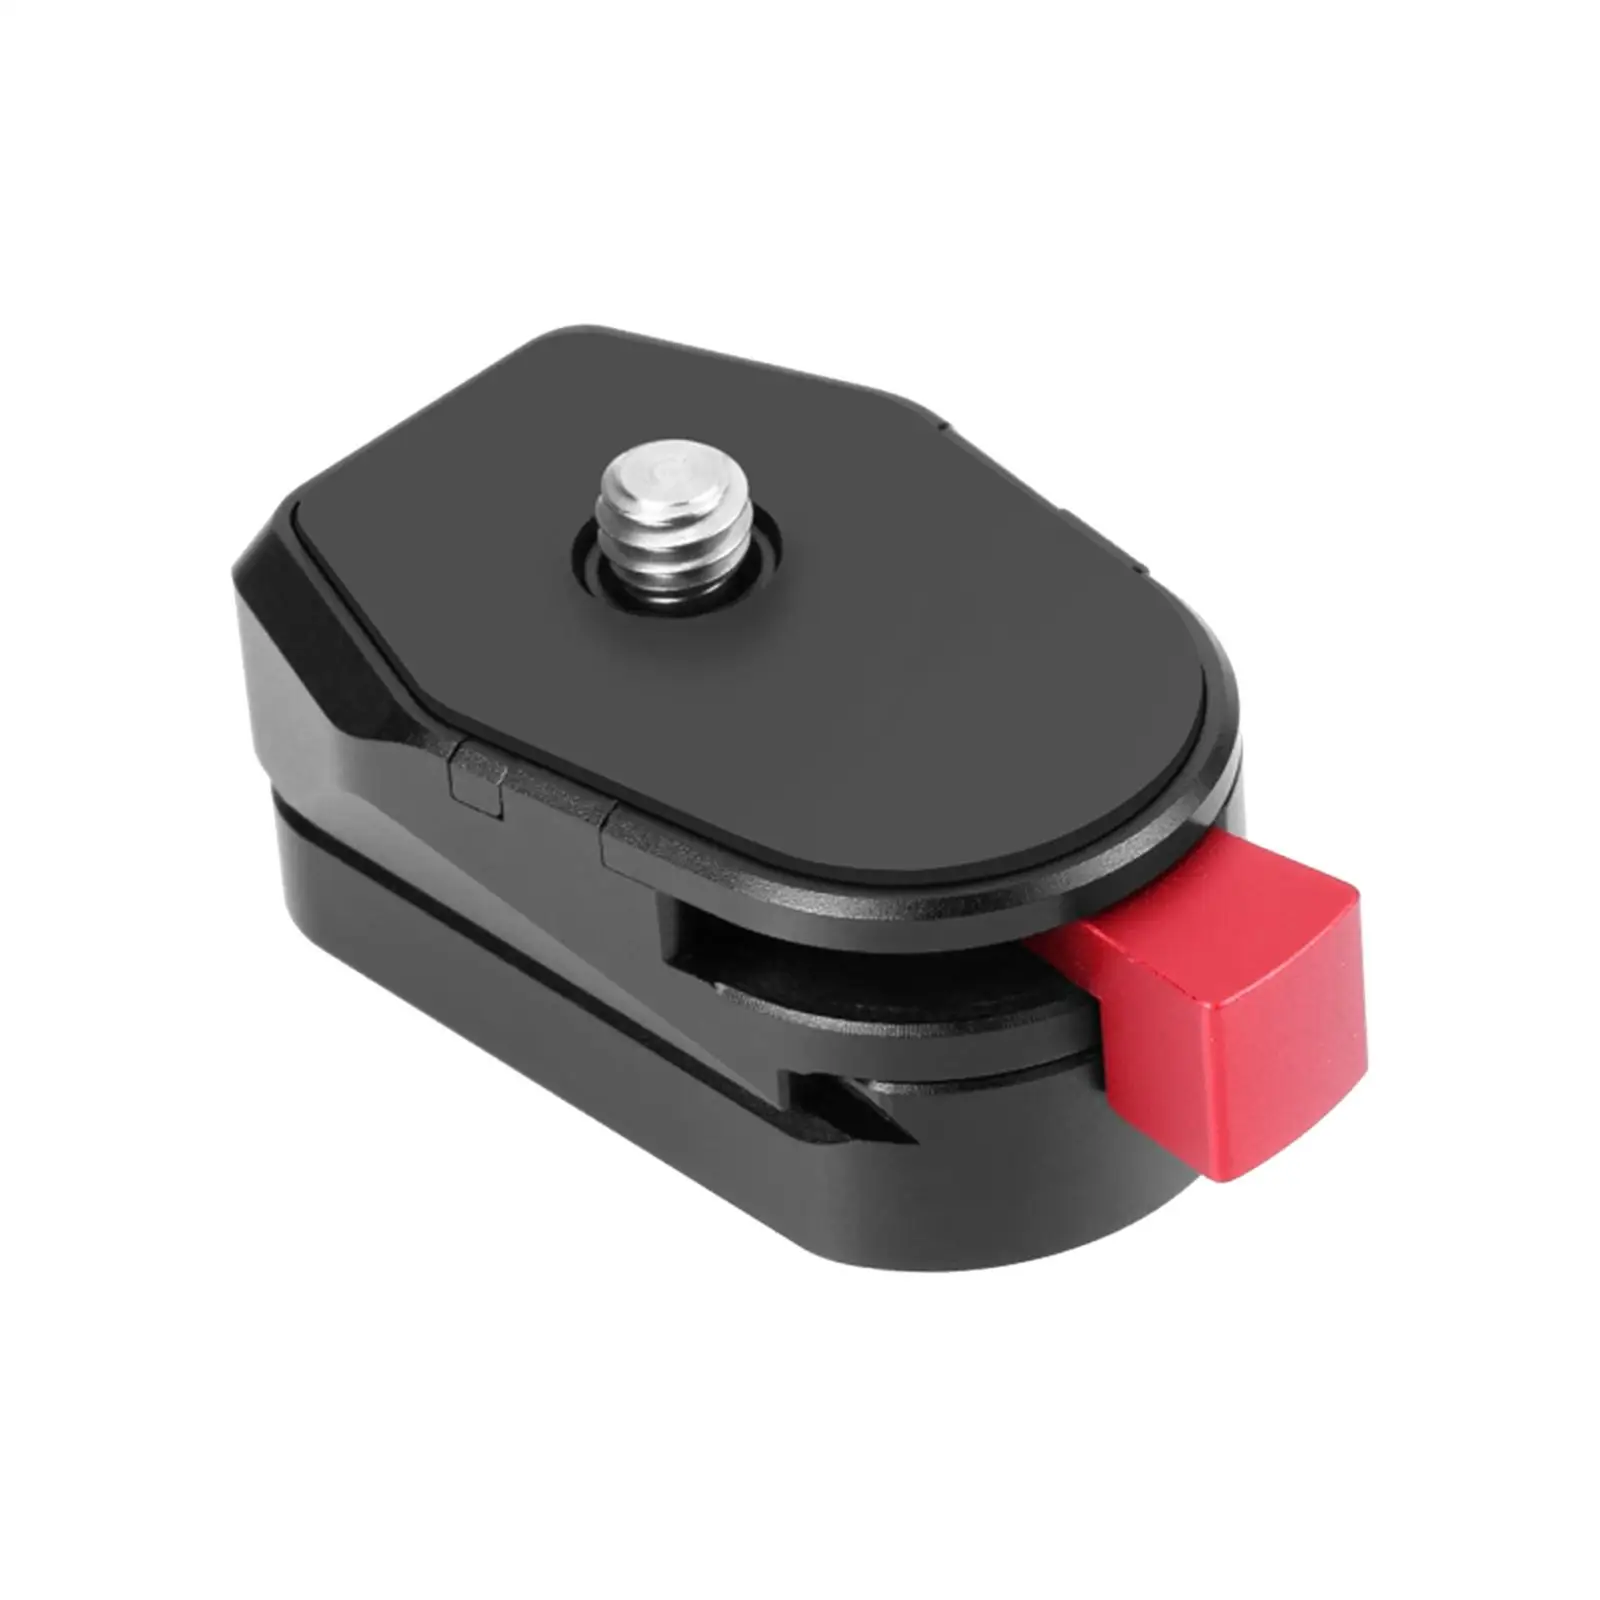 Self Locking quick Release Plate Rustproof Camera Mount Adapter for Stabilizer LED Light Video Monitor Flash Bracket Tripod